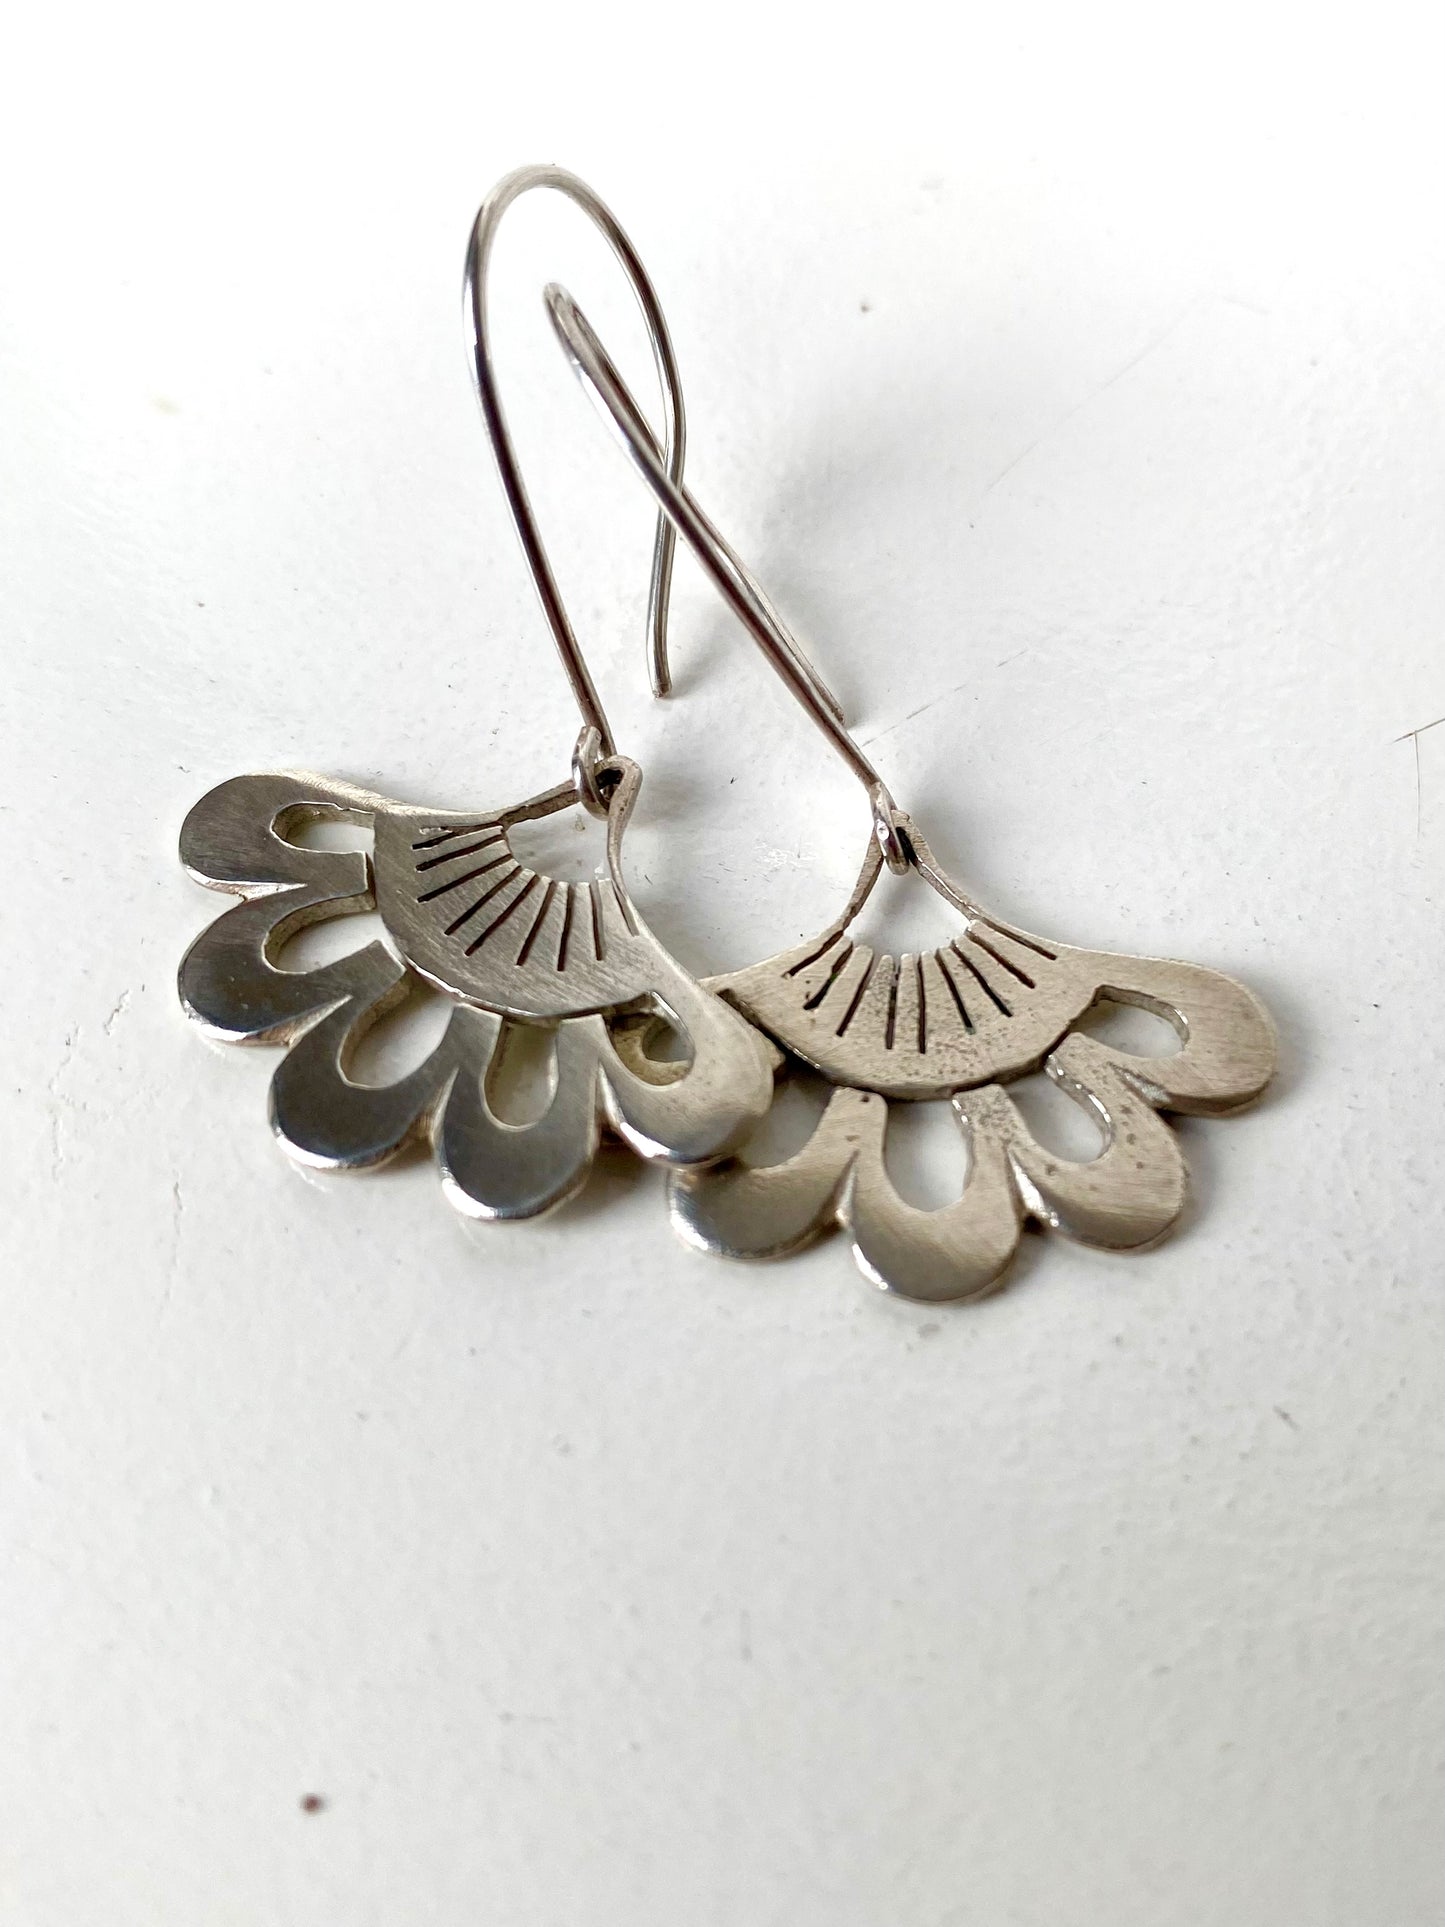 Lotus-Inspired Earrings in sterlin silver or brass